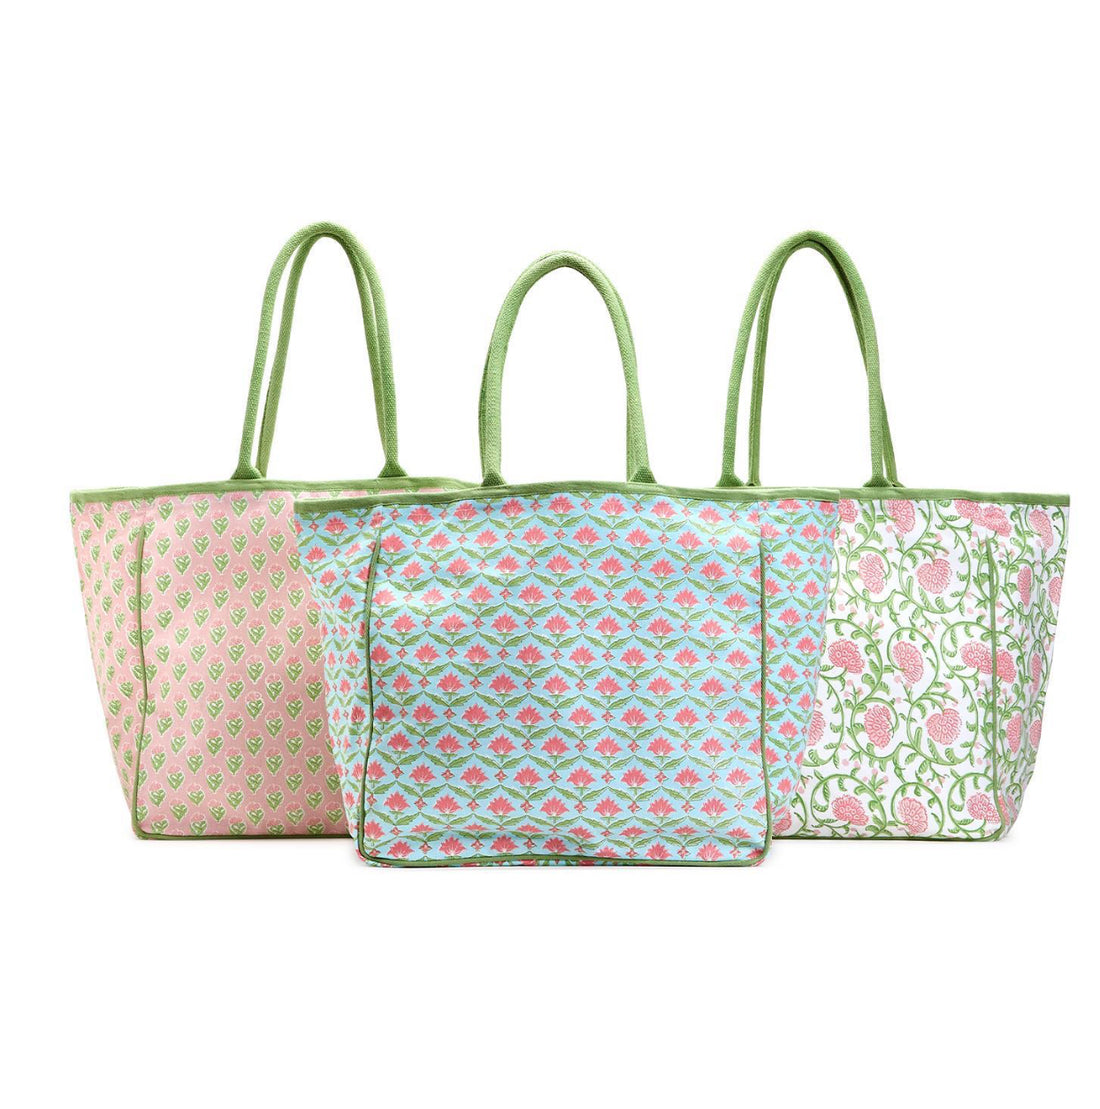 Floral block print tote bag, 3 colors, monogram available!